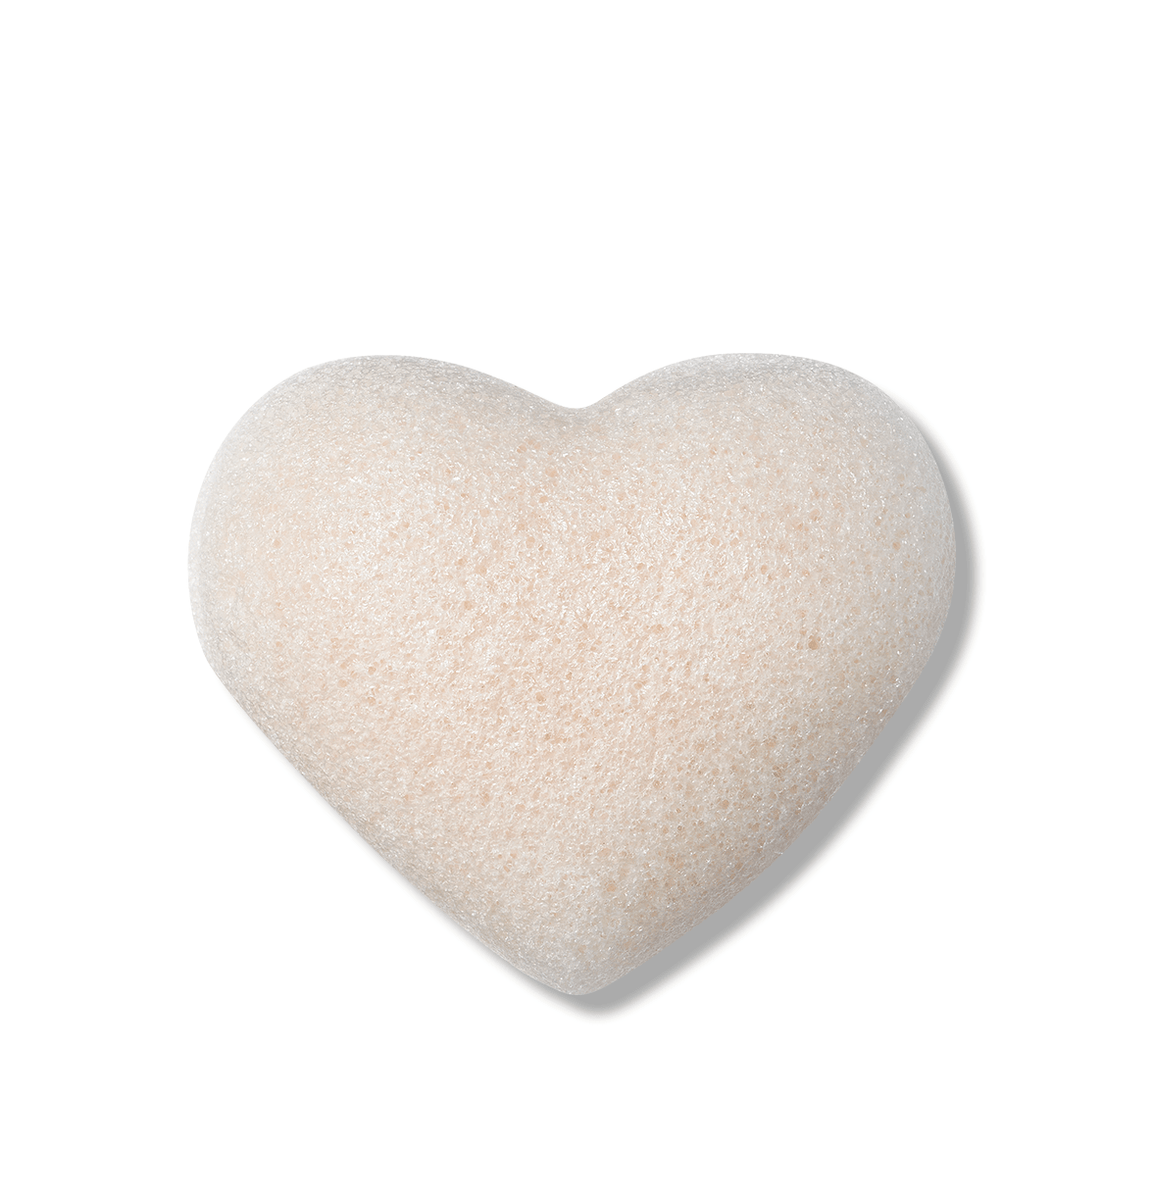 Konjac Sponge for Mature Skin heart shaped